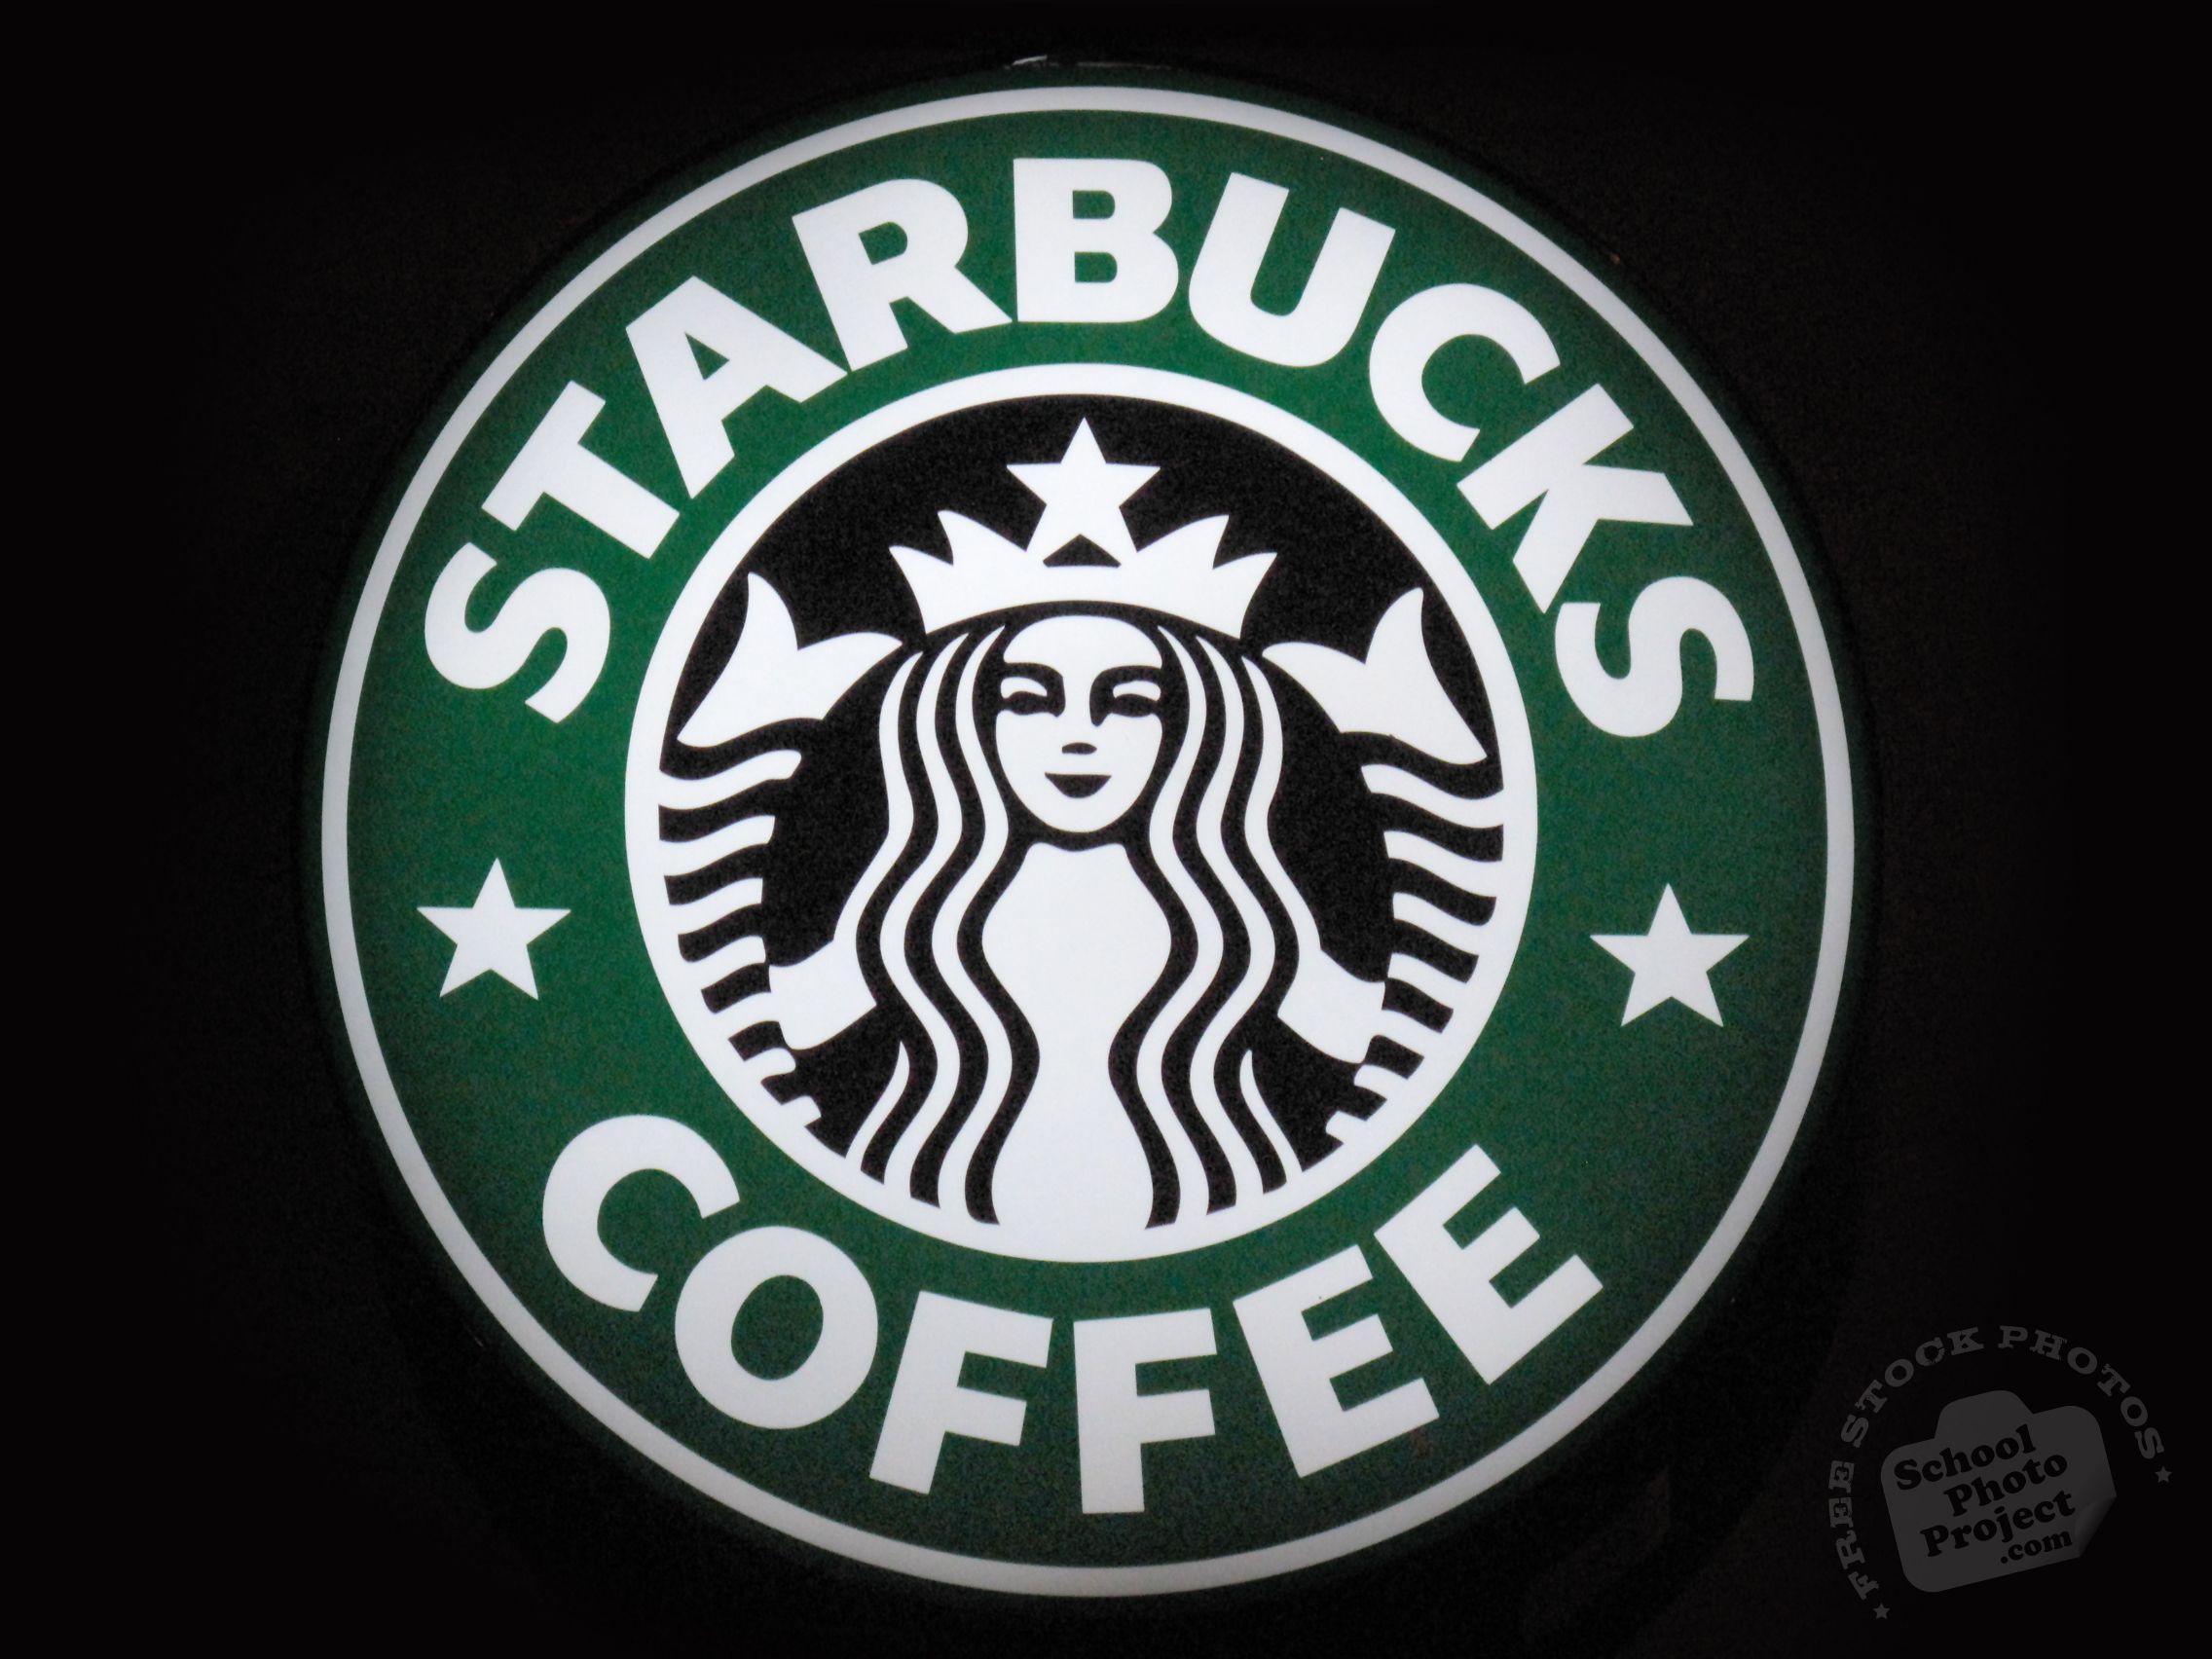 Starbucks Coffee Logo - FREE Starbucks Coffee Logo, Starbucks Identity, Popular Company's ...